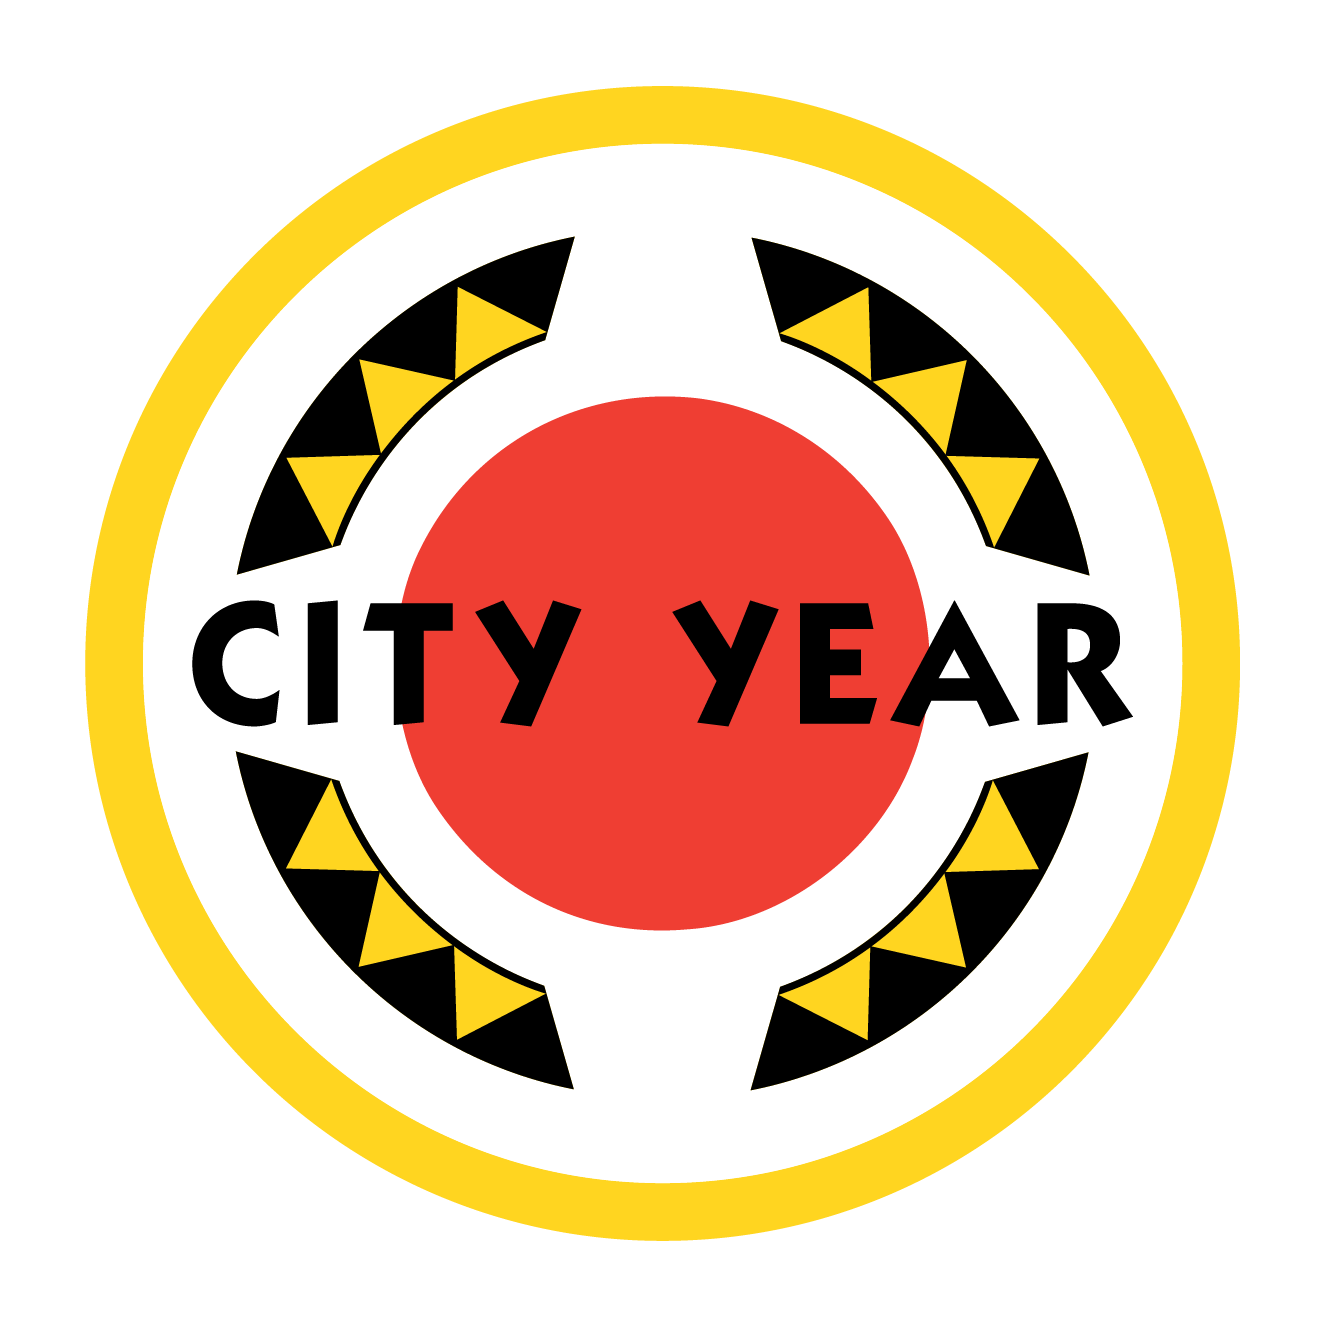 city year